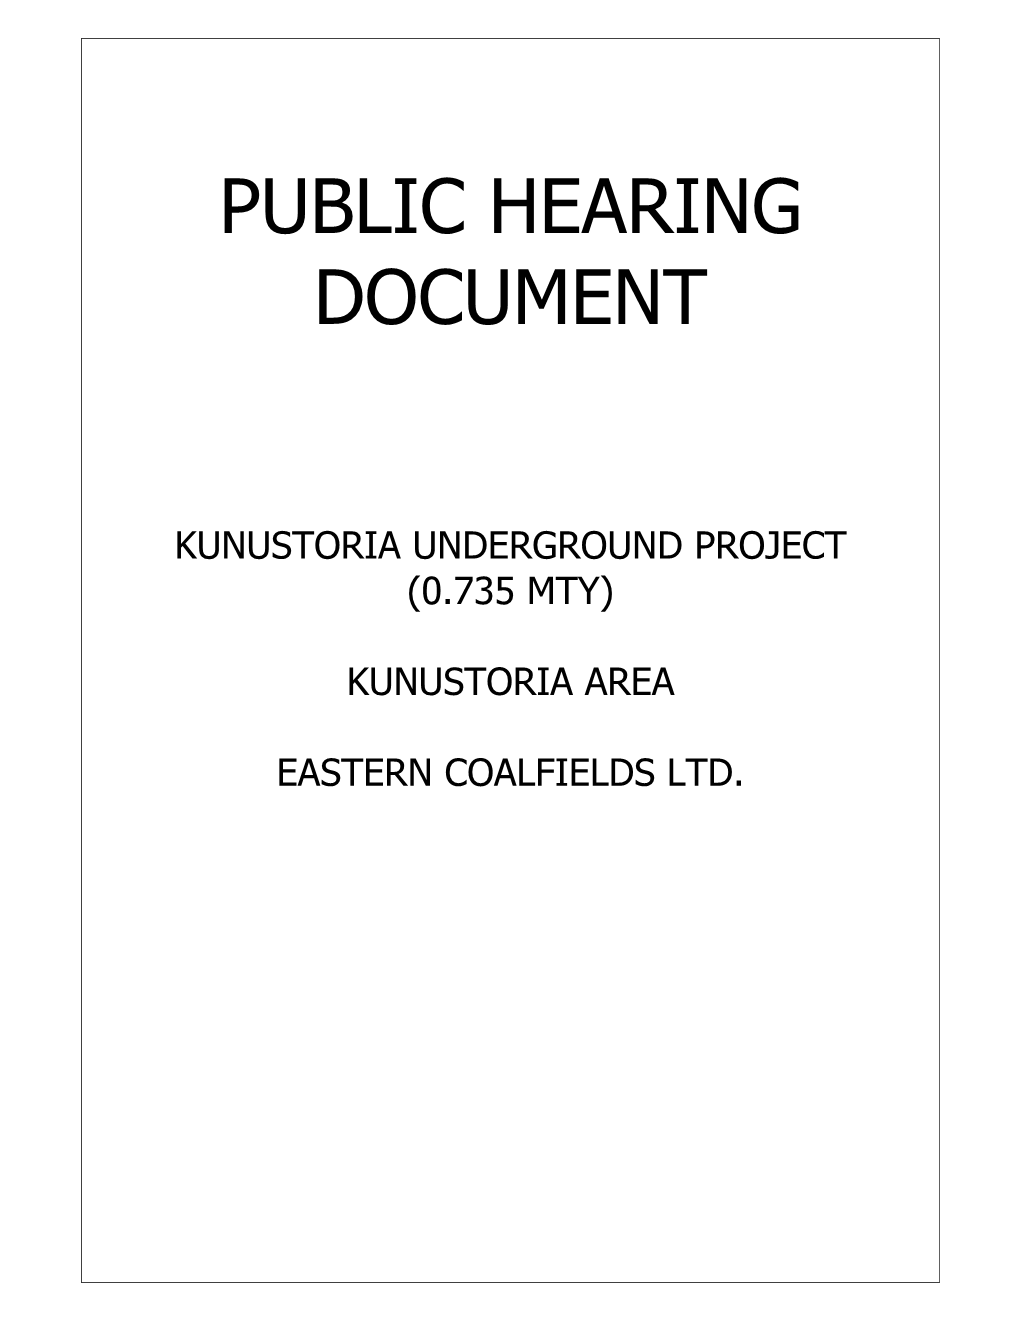 Public Hearing Document